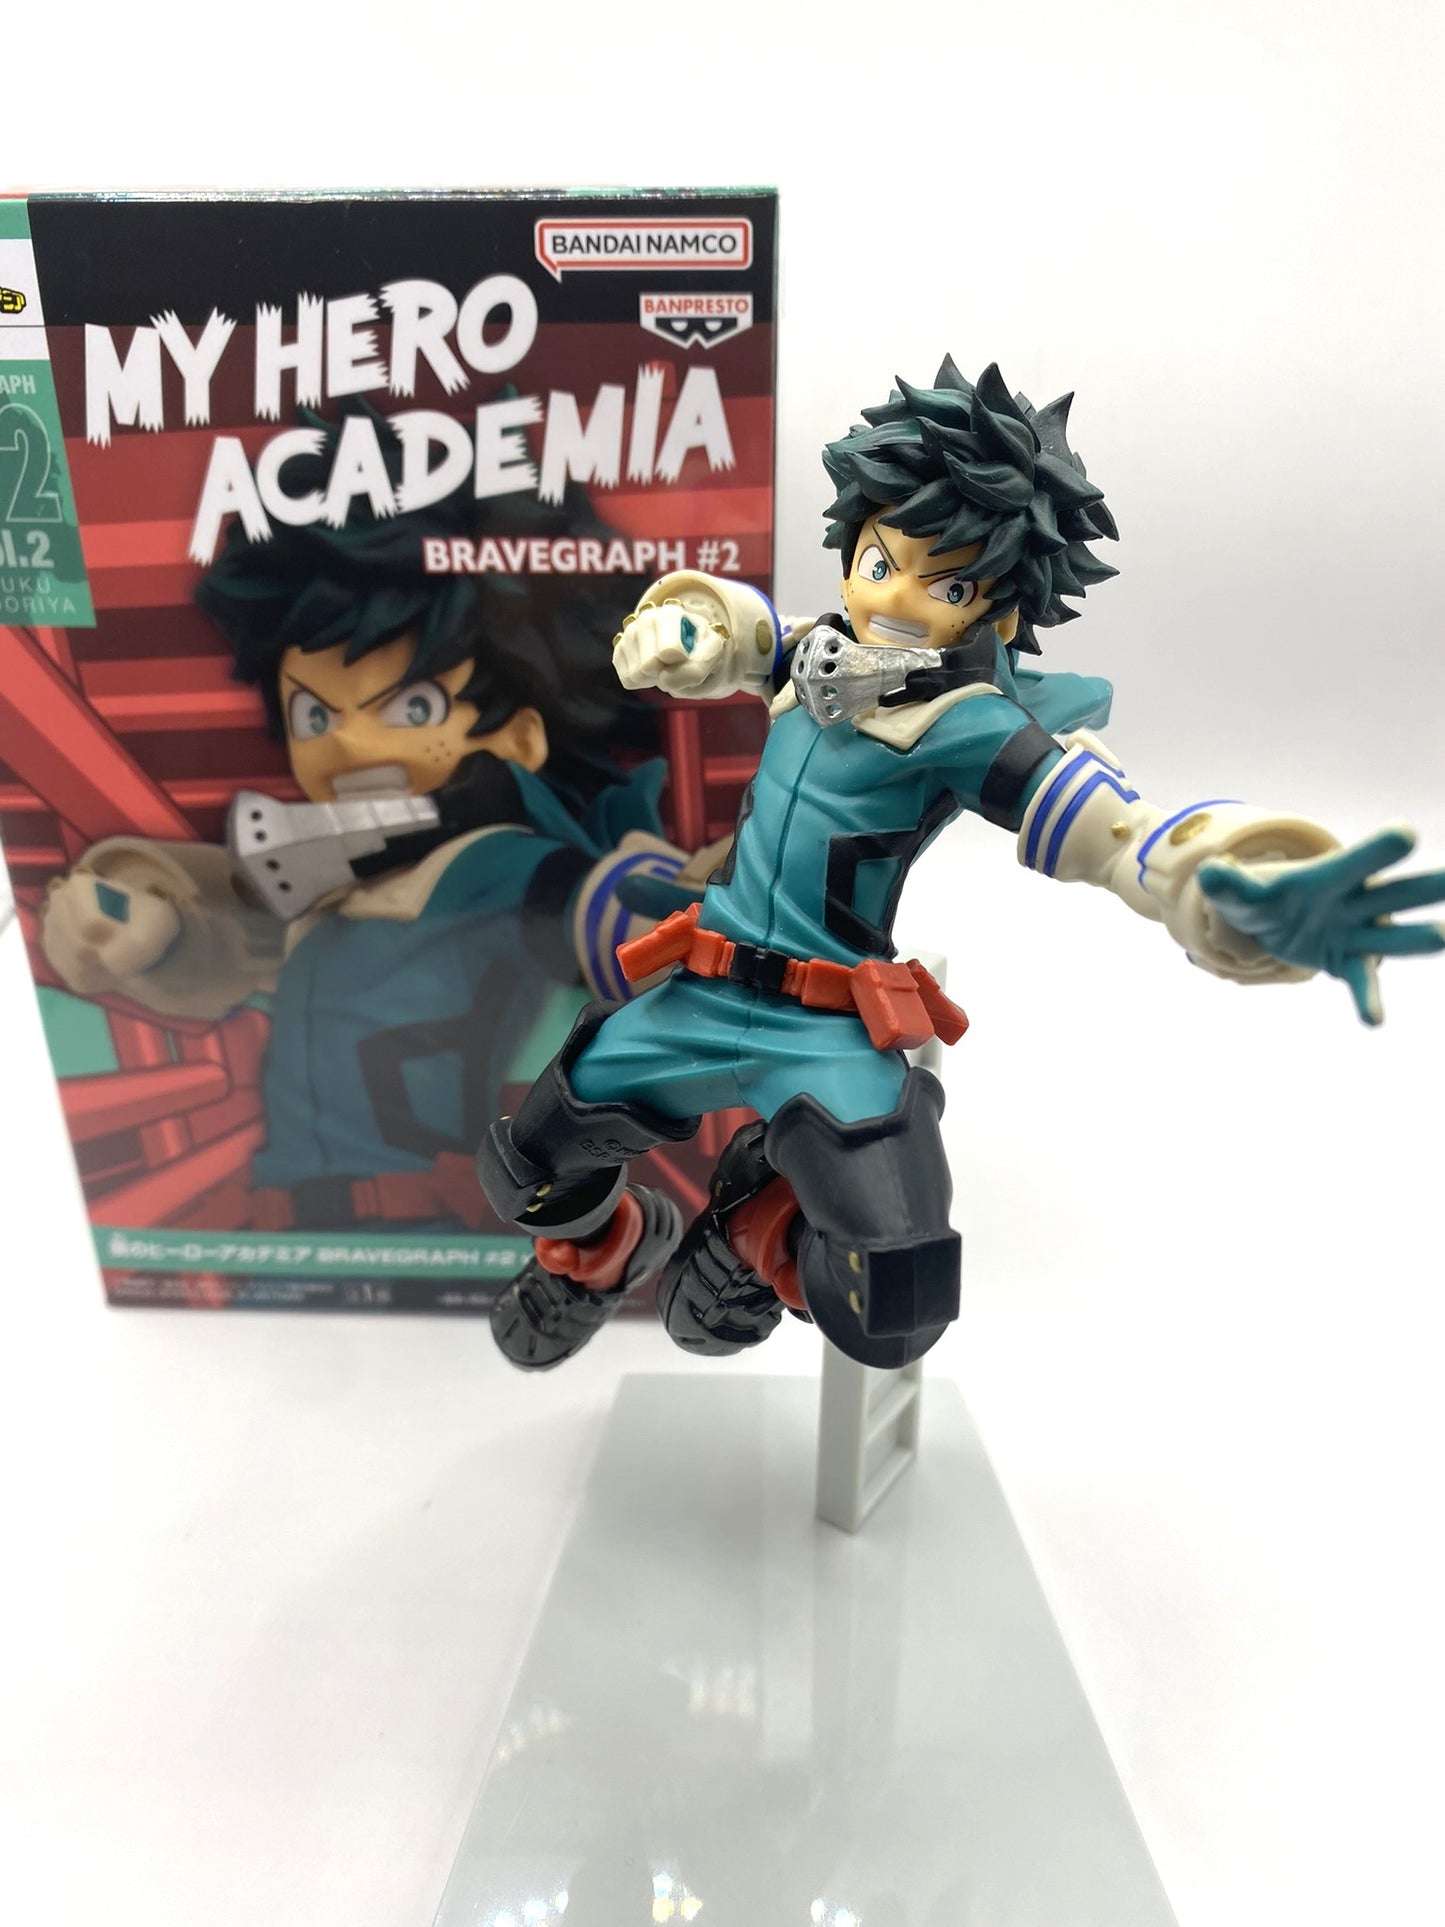 My Hero Academia Izuku Midoriya Bravegraph #2 Figure / Figurine Vol.2 Bandai